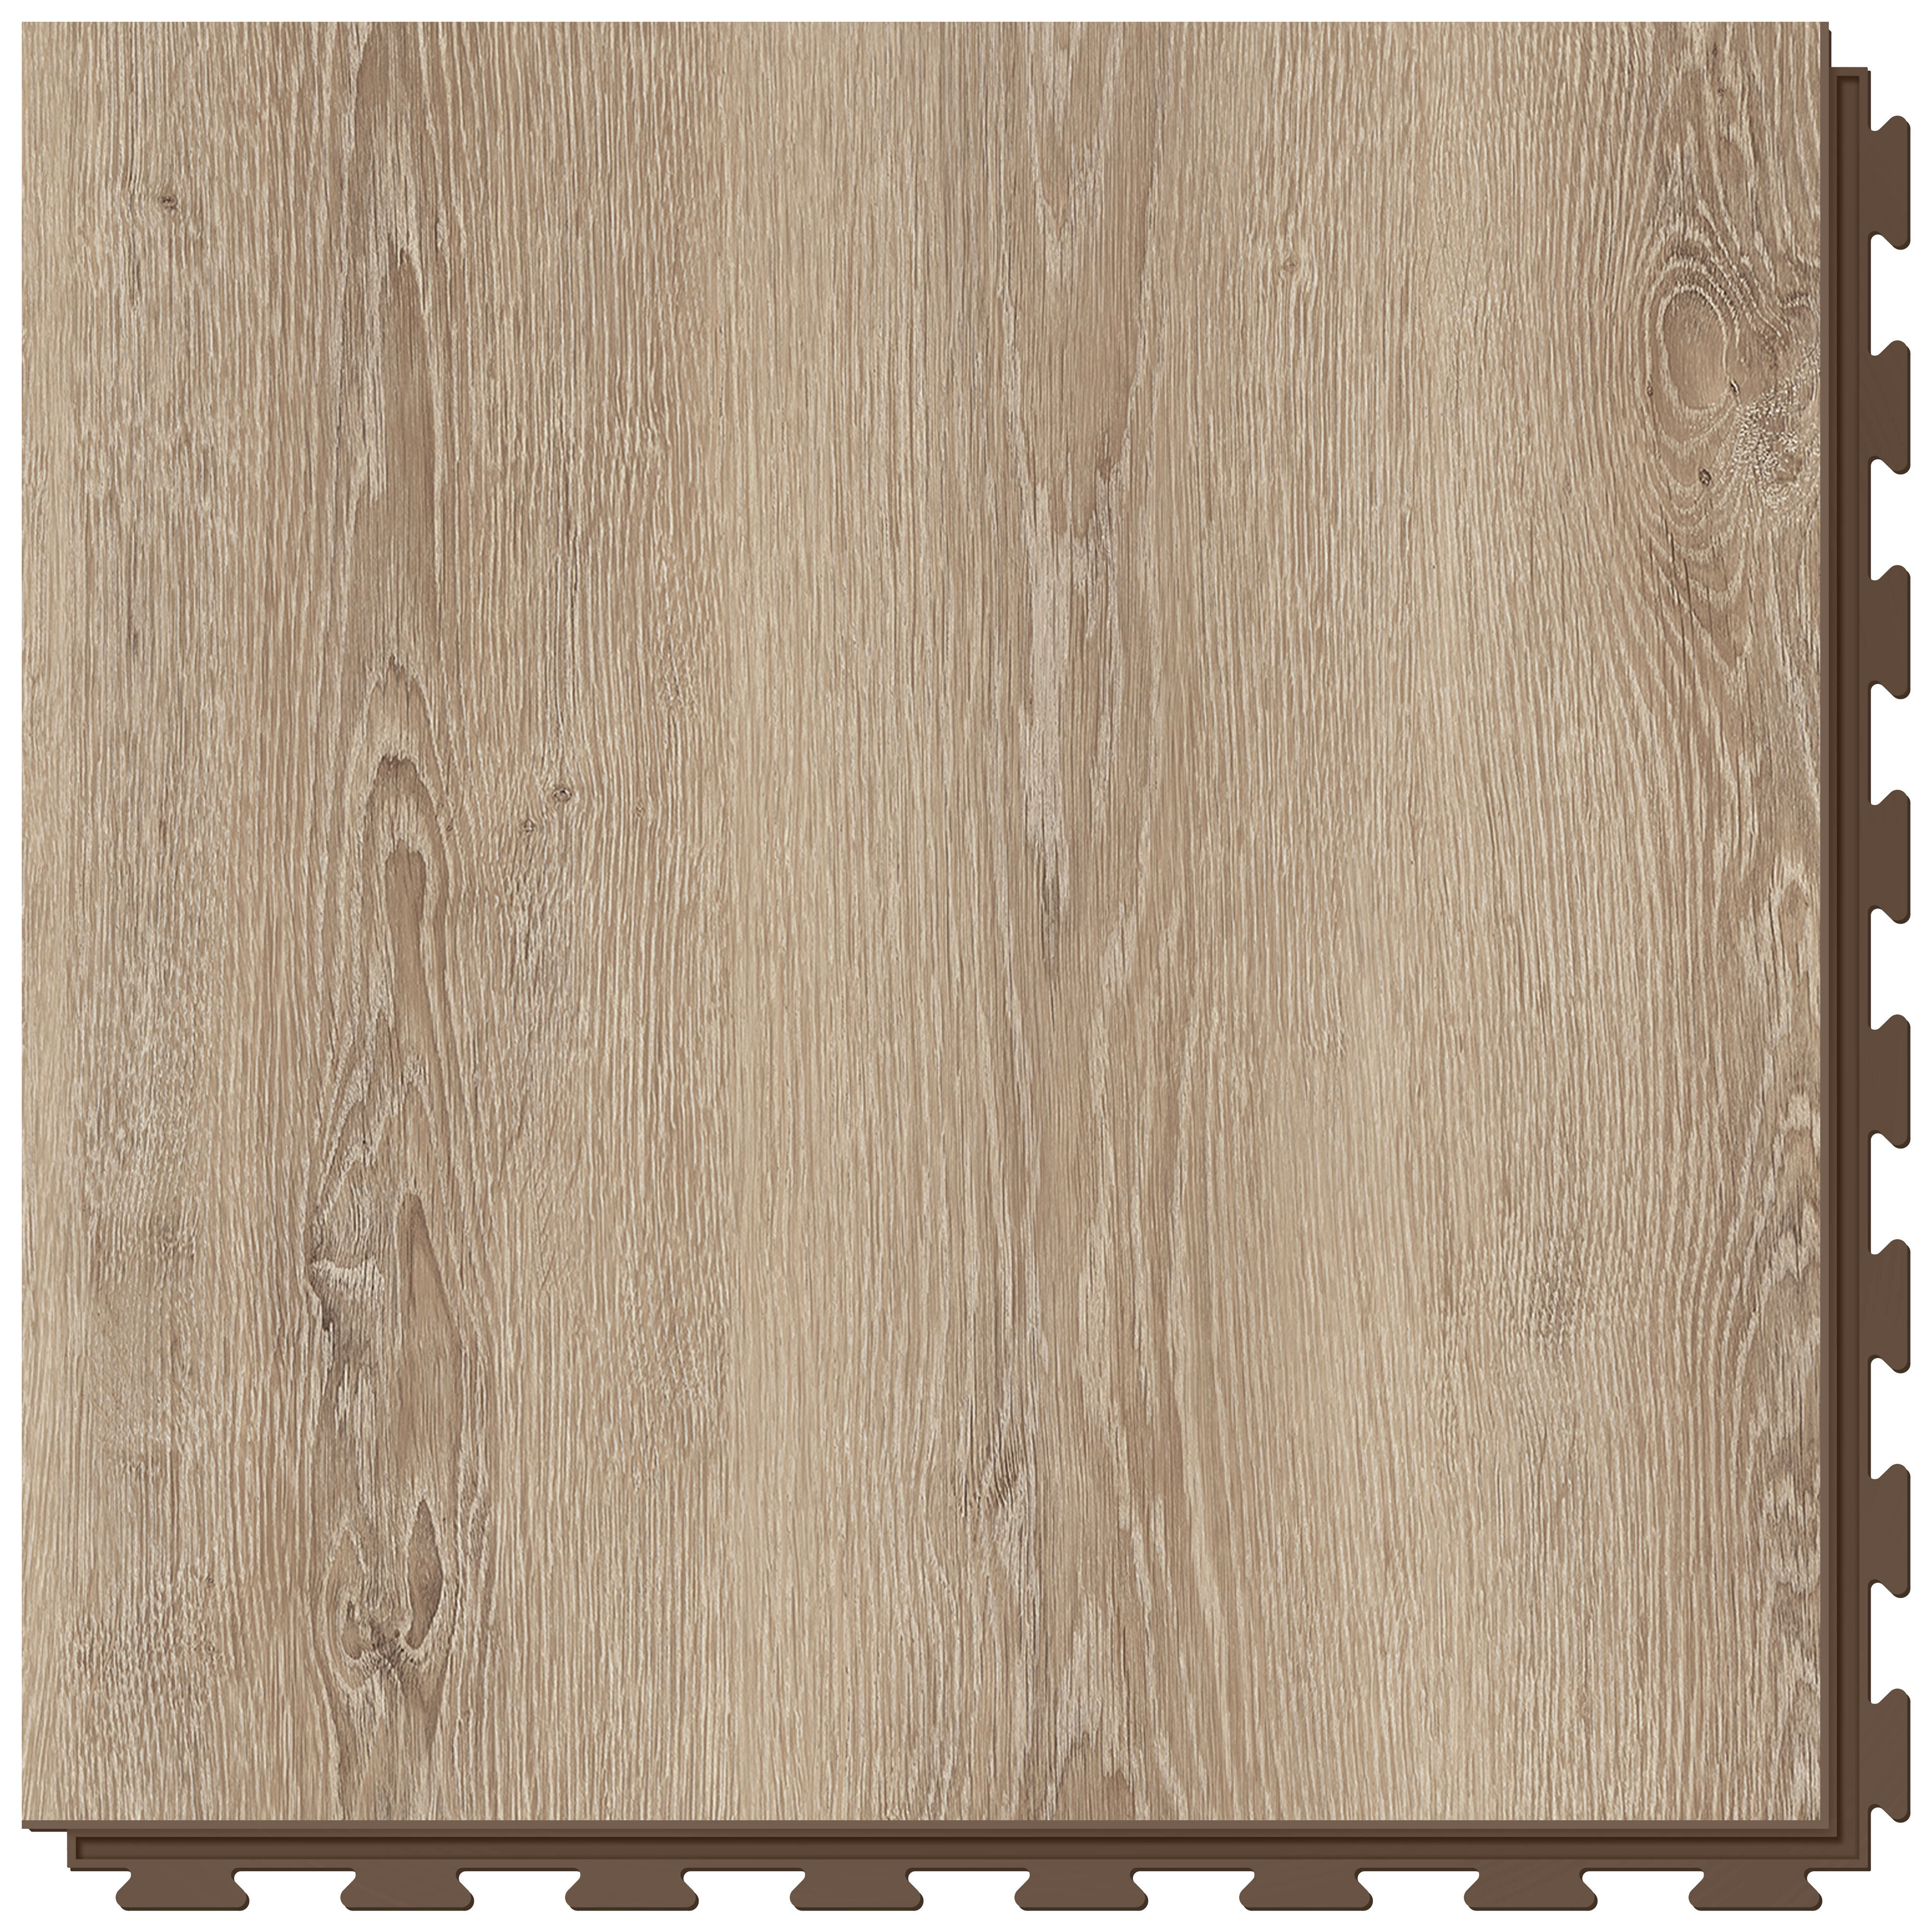 Hnědá PVC vinylová dlažba Fortelock Business Tyrolean oak W001 Brown - délka 66,8 cm, šířka 66,8 cm, výška 0,7 cm